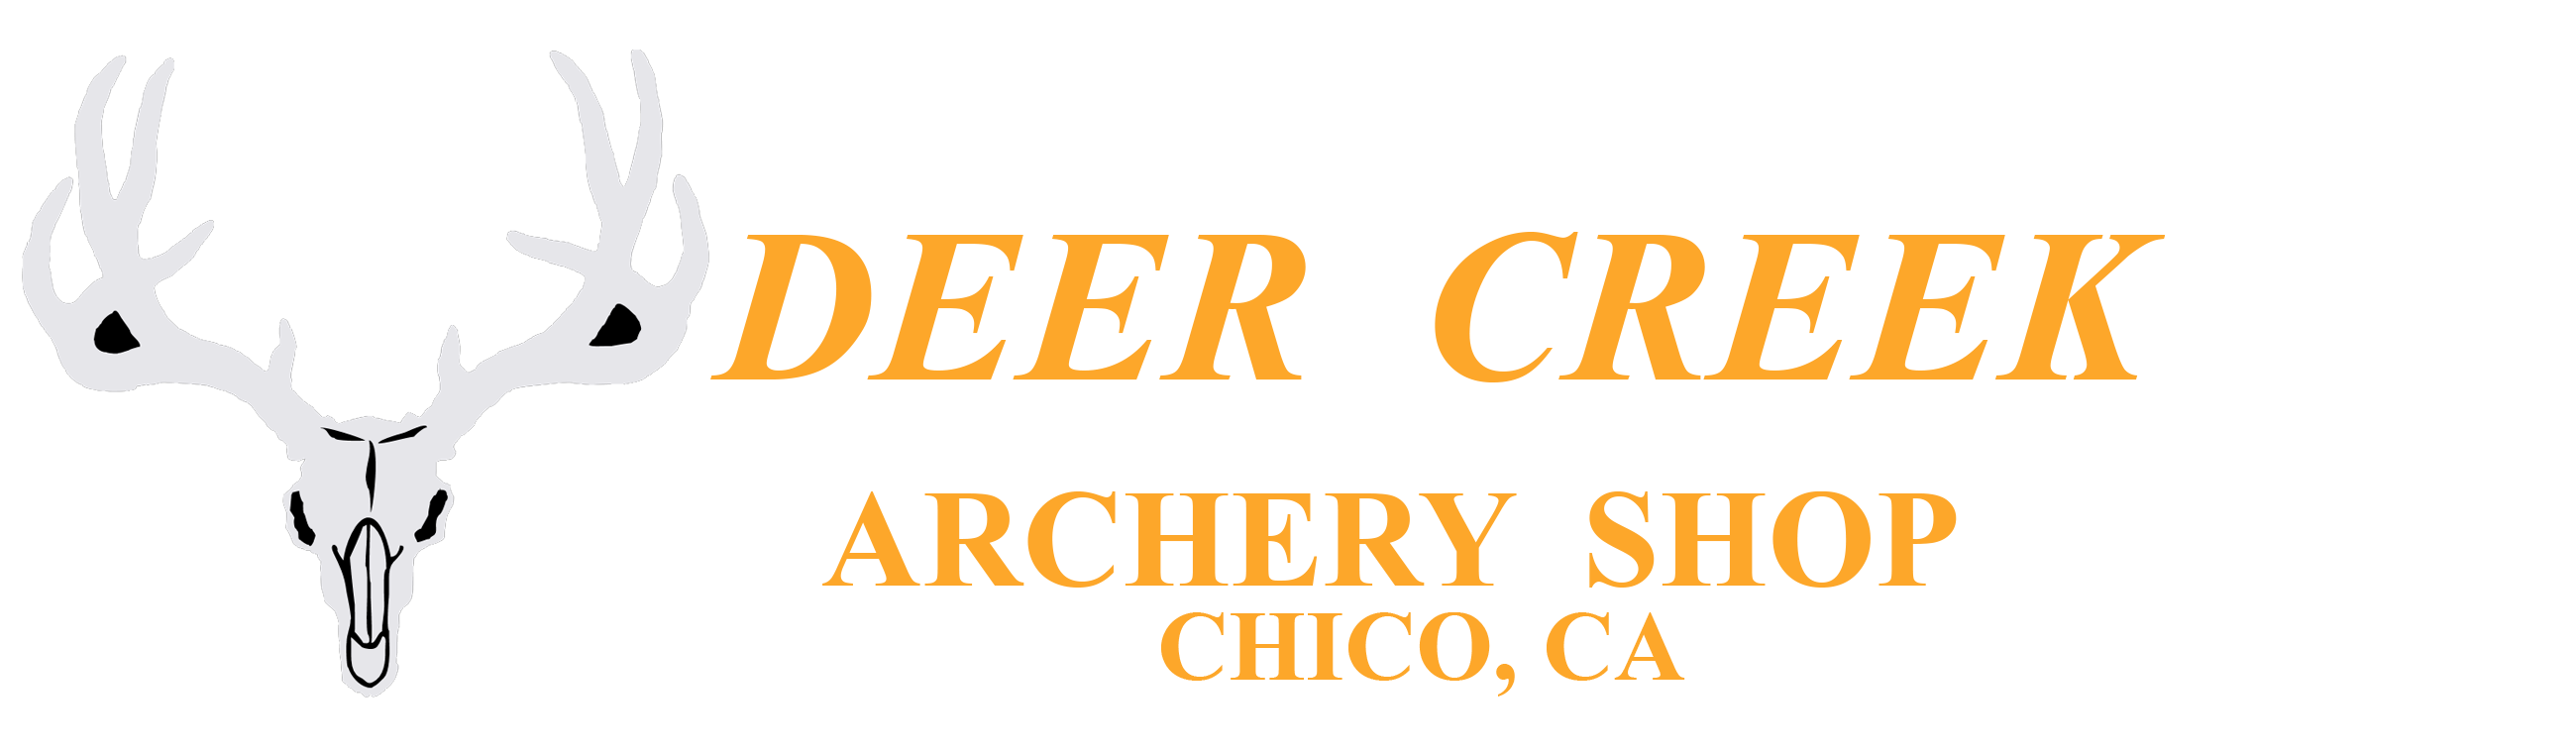 Deer Creek Archery in Chico California (530) 894-3840